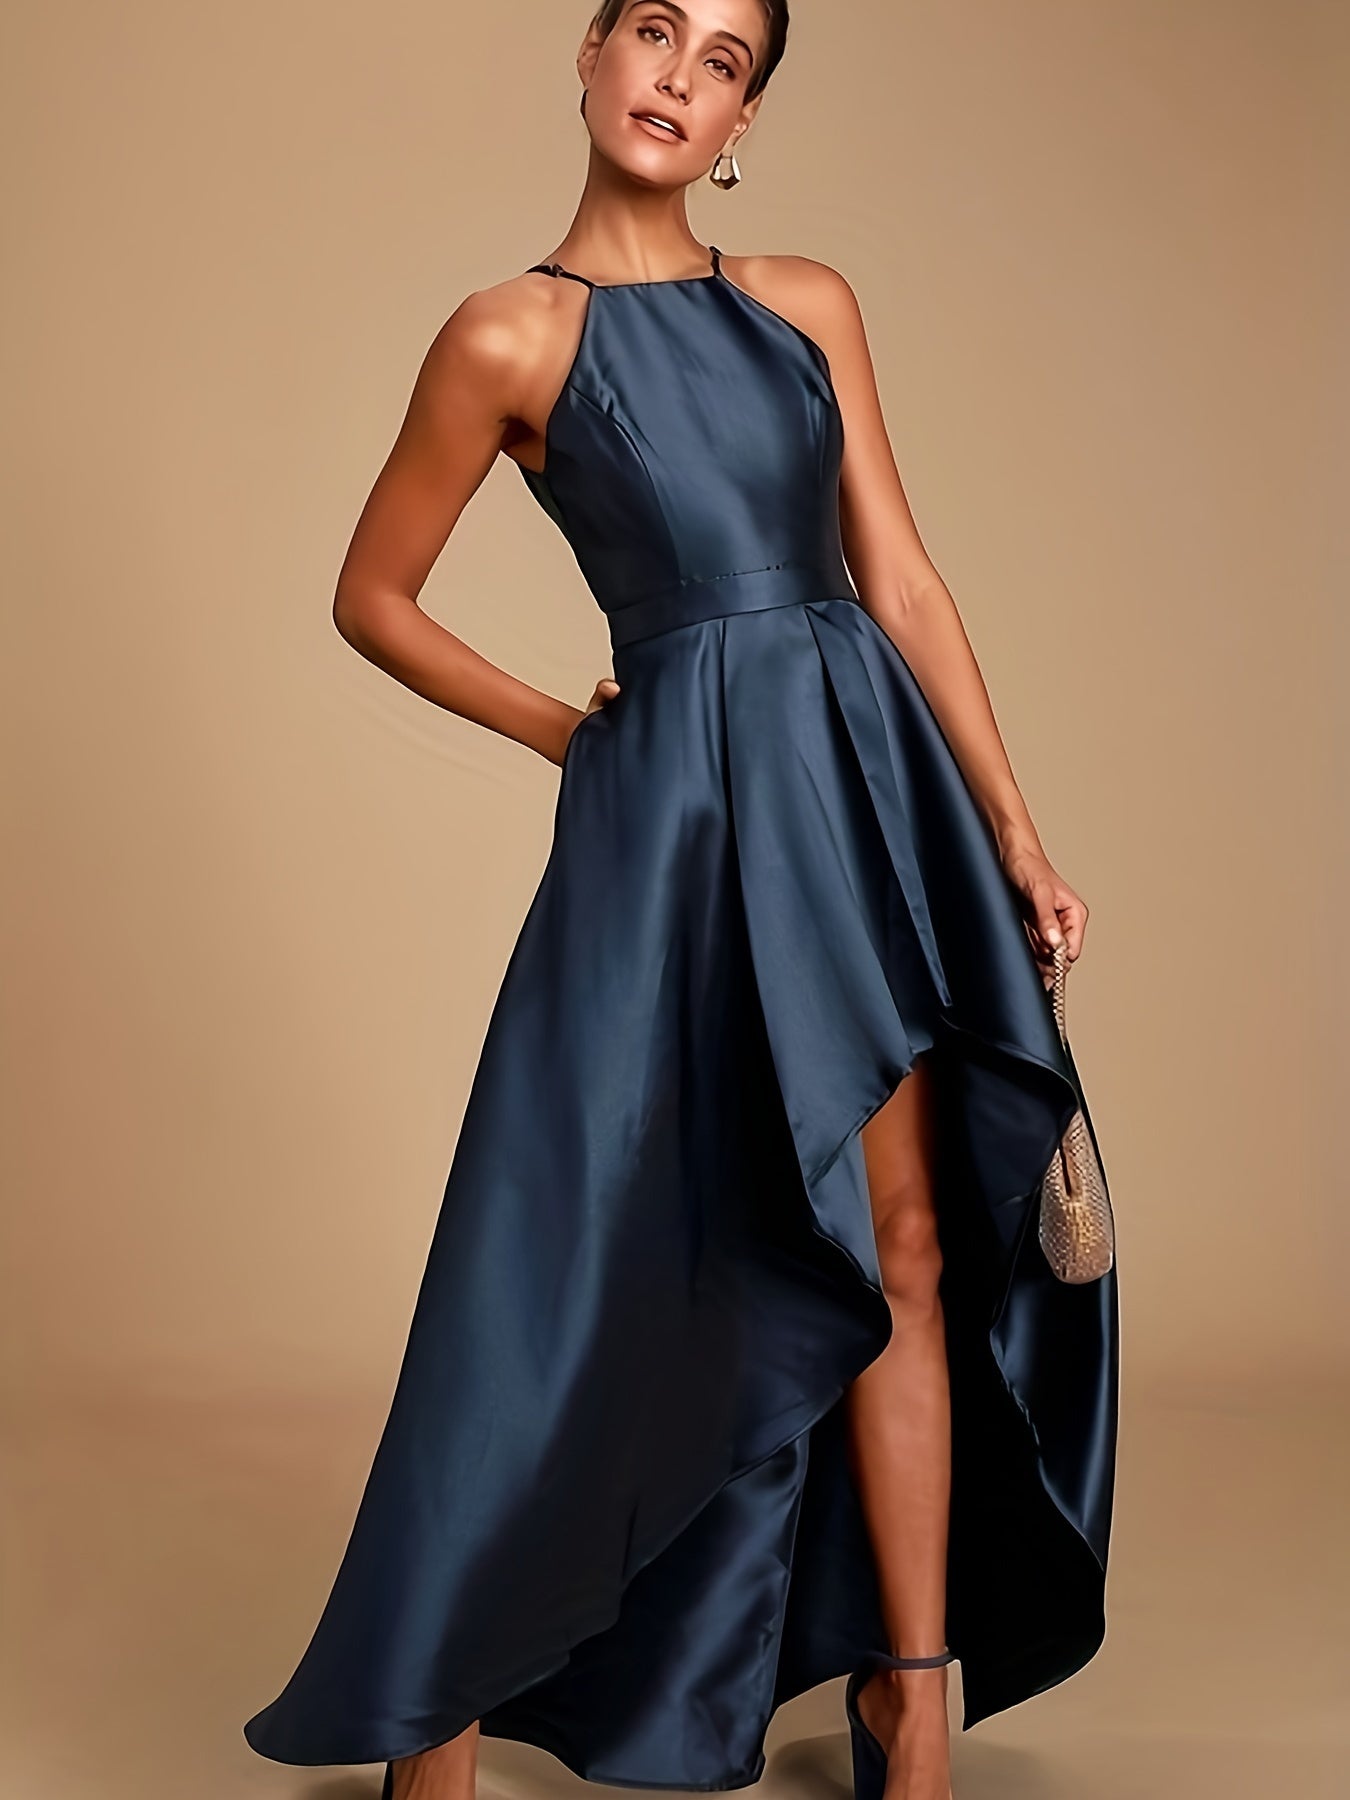 vzyzv  Solid Spaghetti Strap Dress, Elegant Sleeveless High-low Dress, Women's Clothing